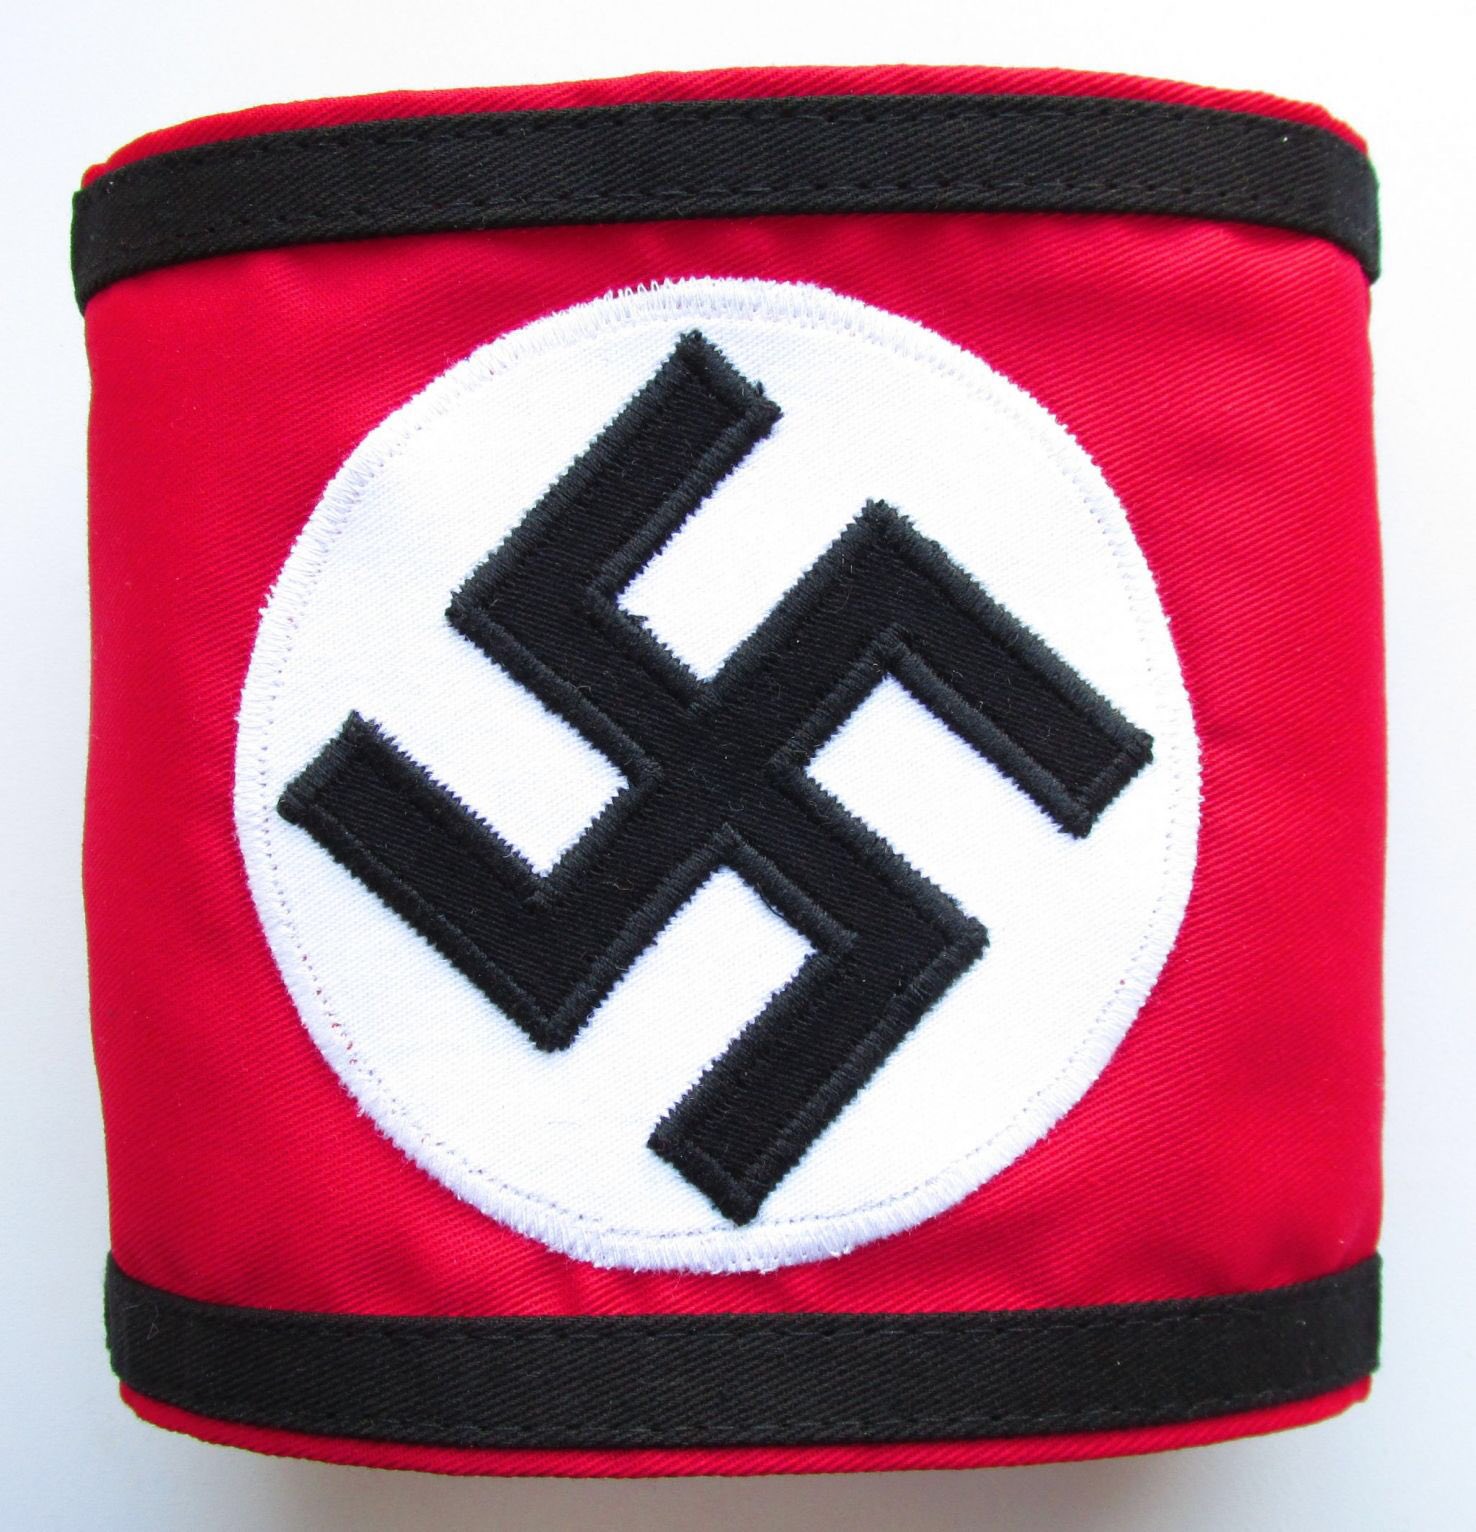 Alexey в Твиттере: "Повязки явно копируют нацистскую символи